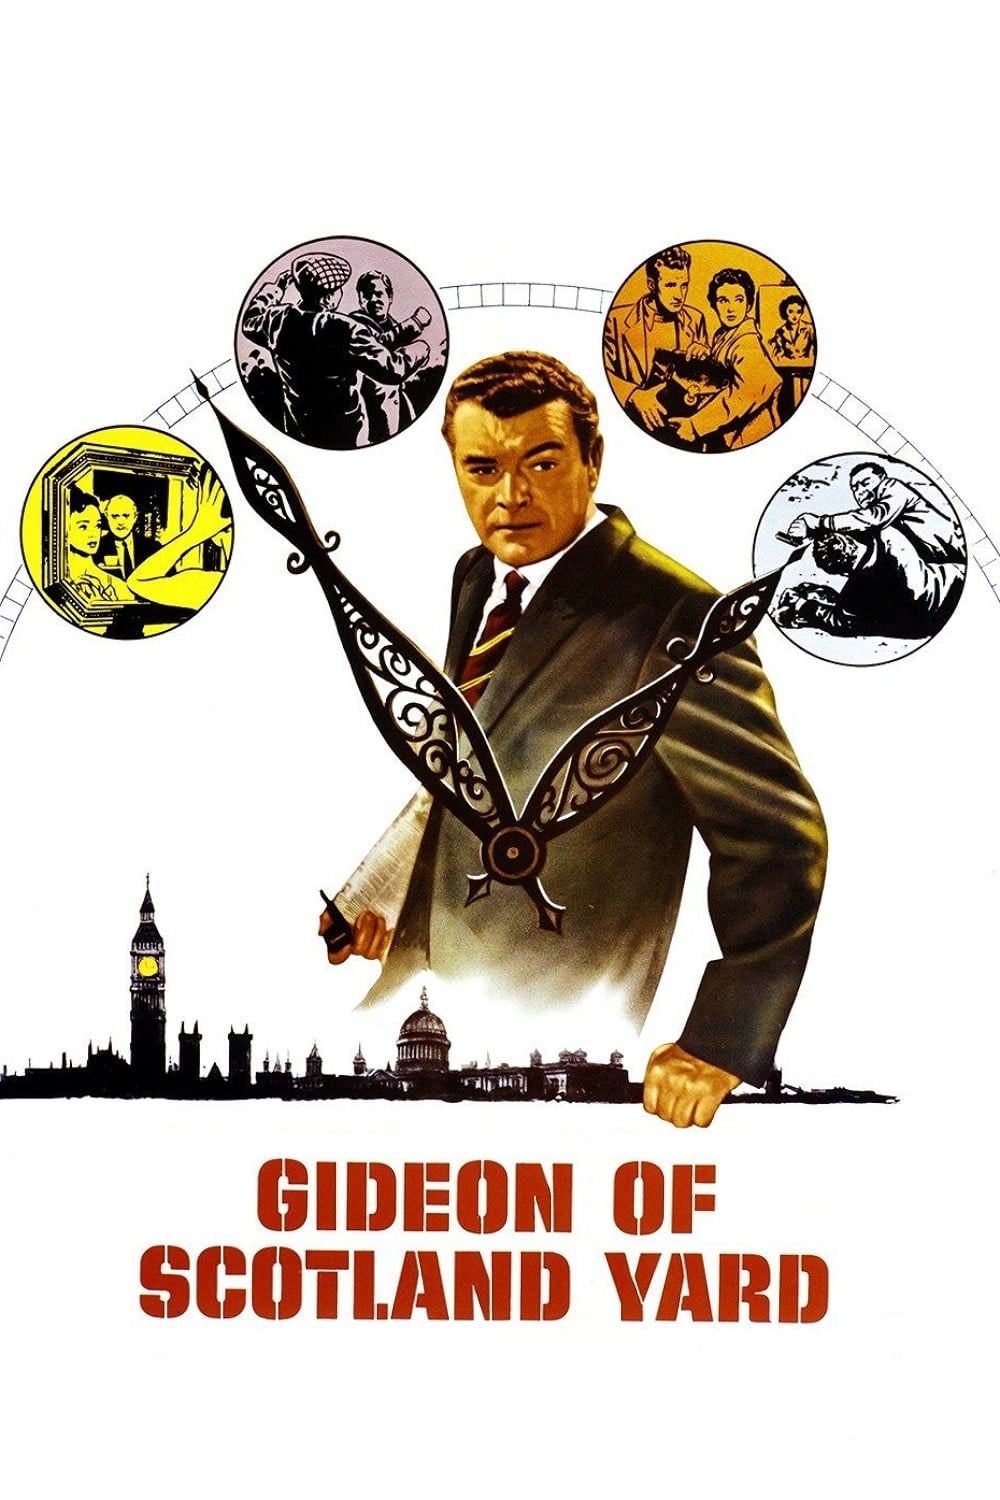 Chefinspektor Gideon